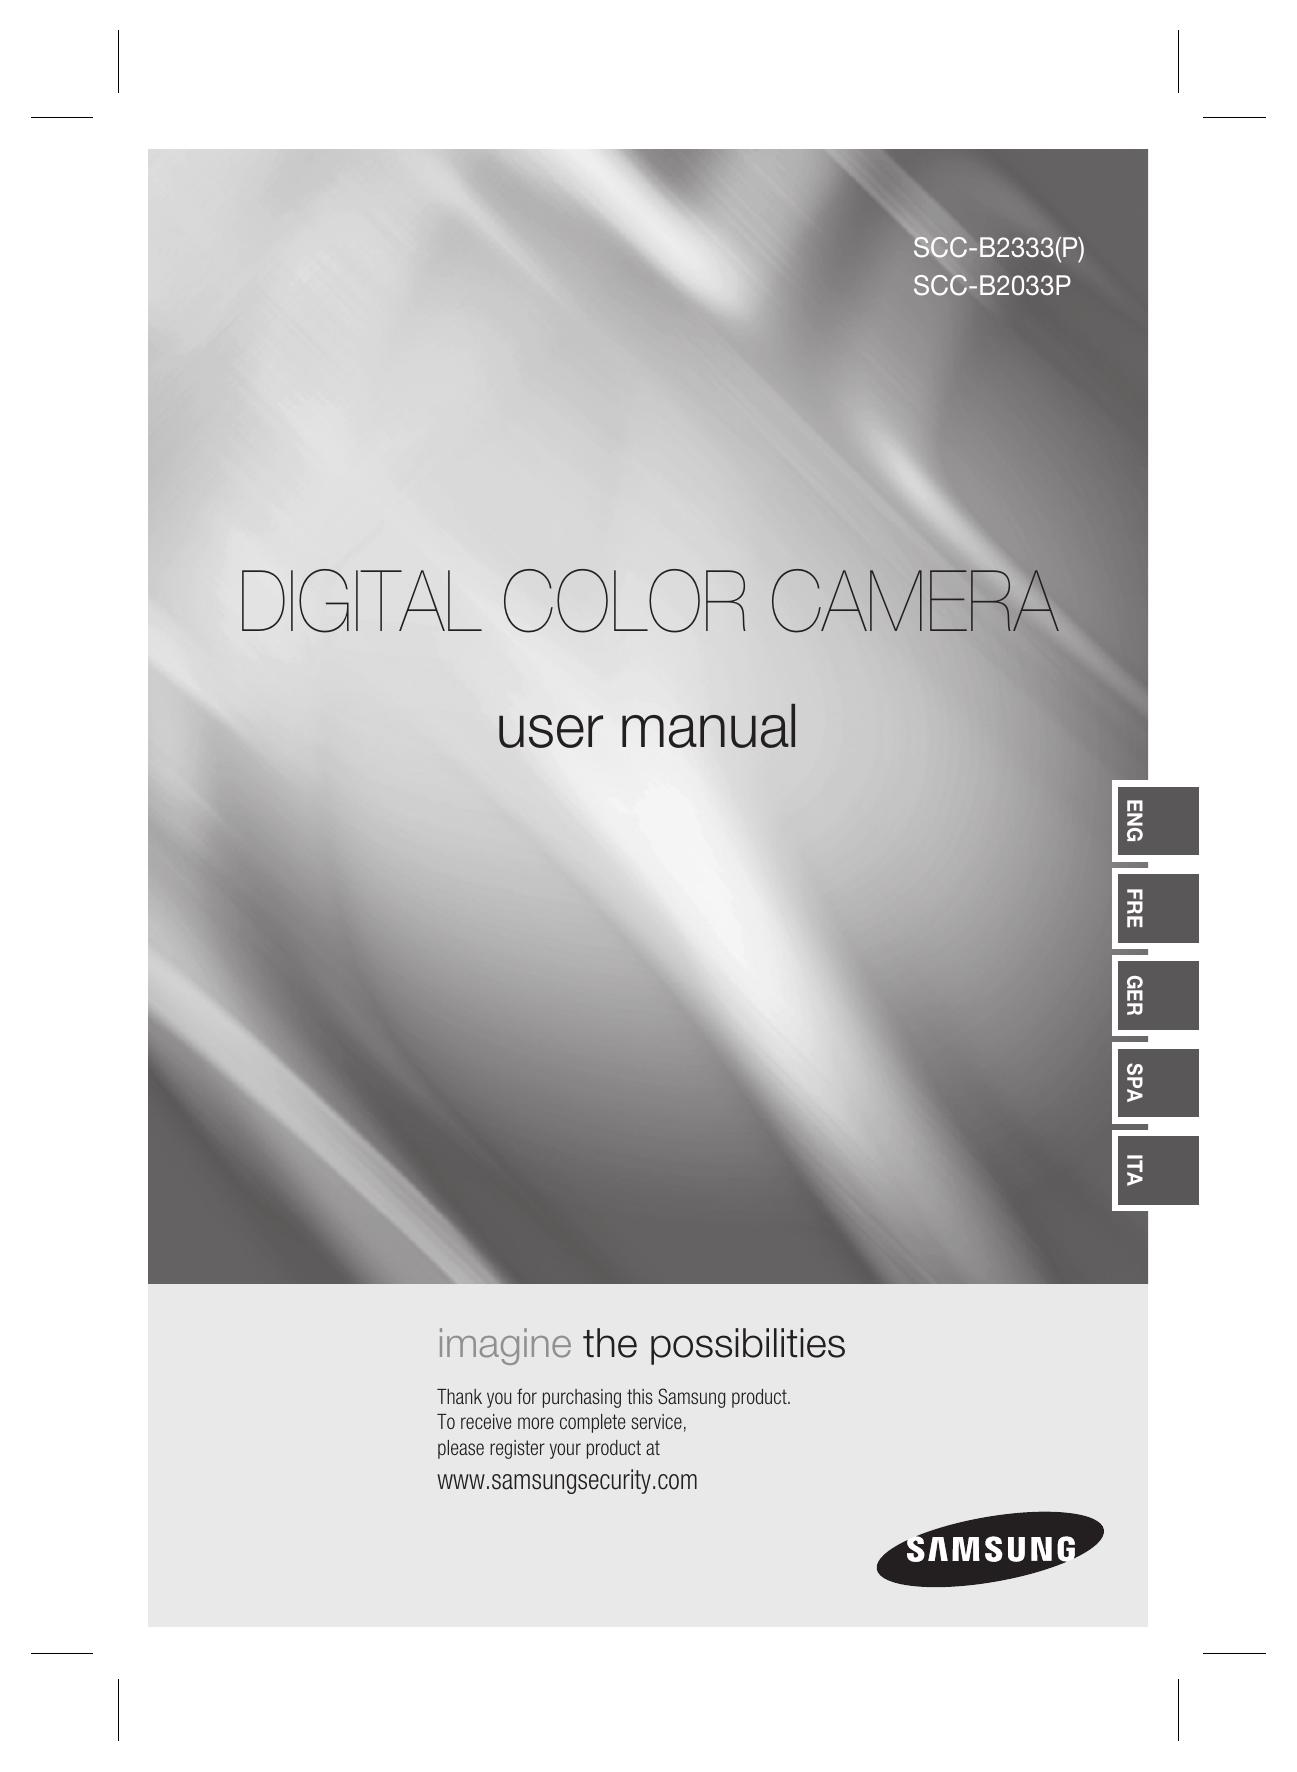 Samsung SCC-B2033P Security Camera User Manual